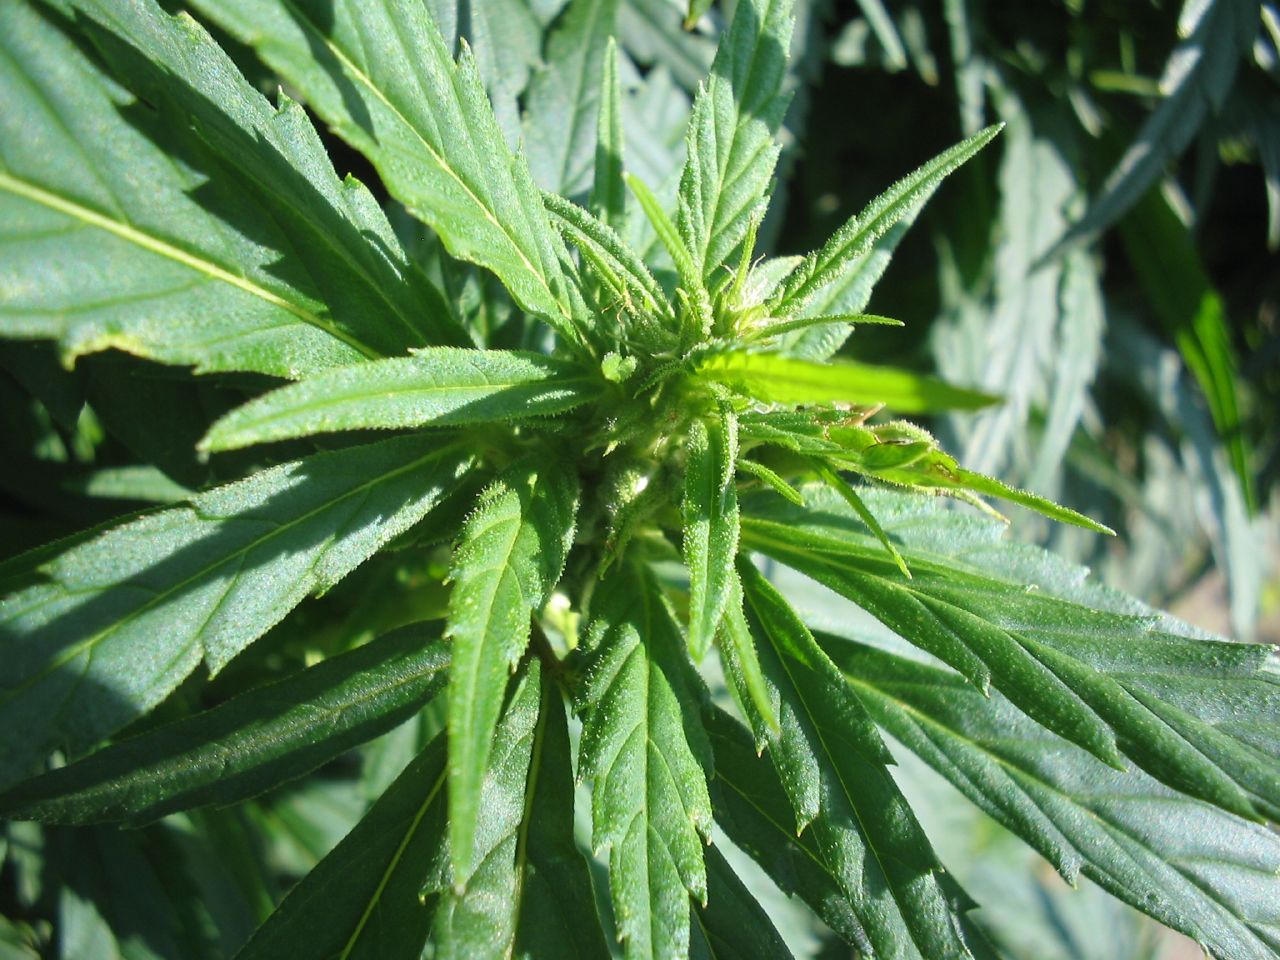 the marijuana plant is turning to dark green